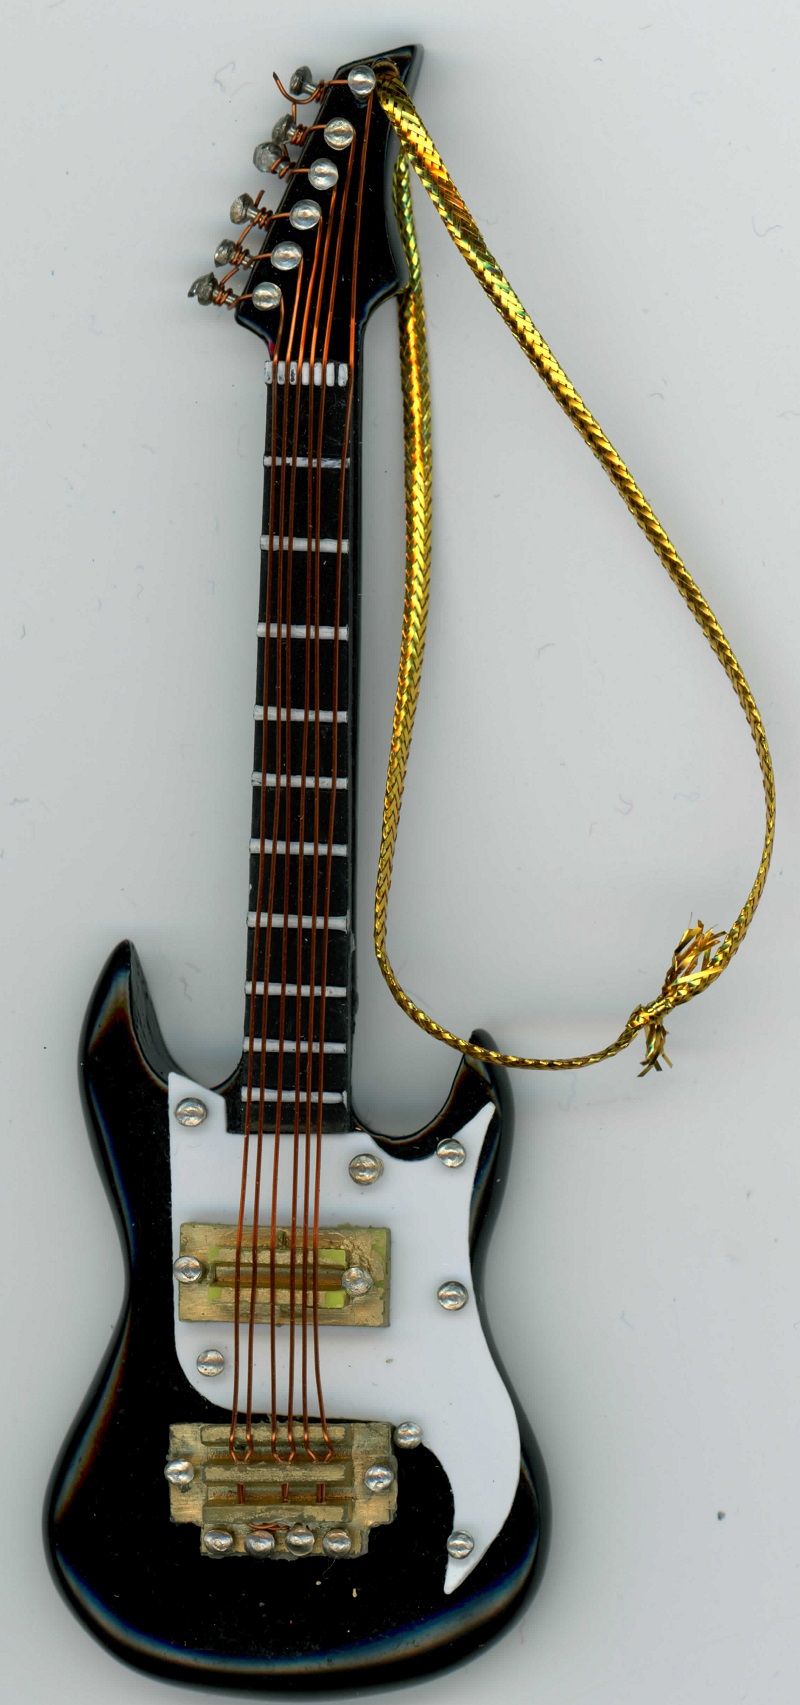 Electric Guitar Ornament in Black